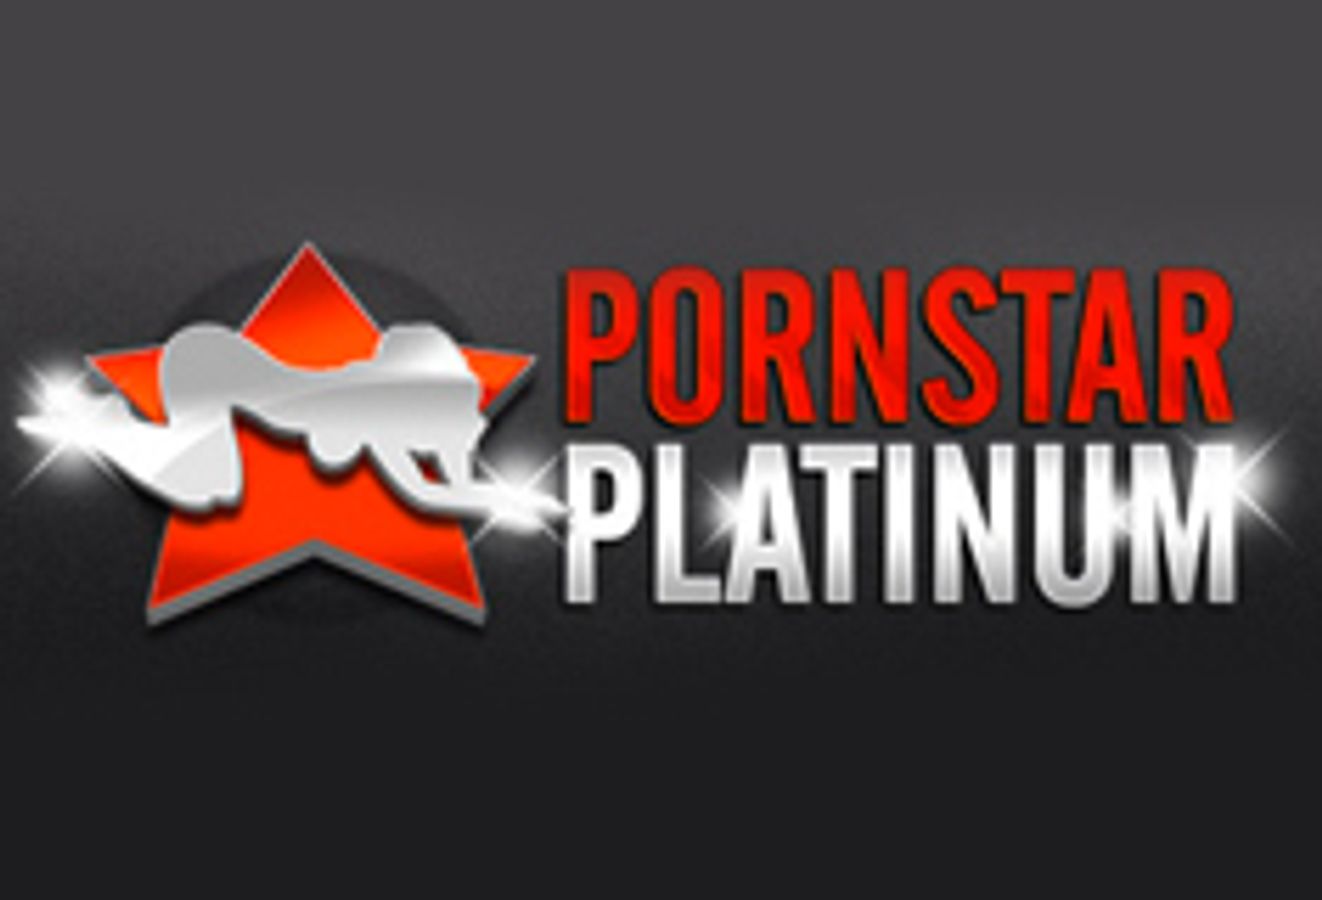 PornStar Platinum